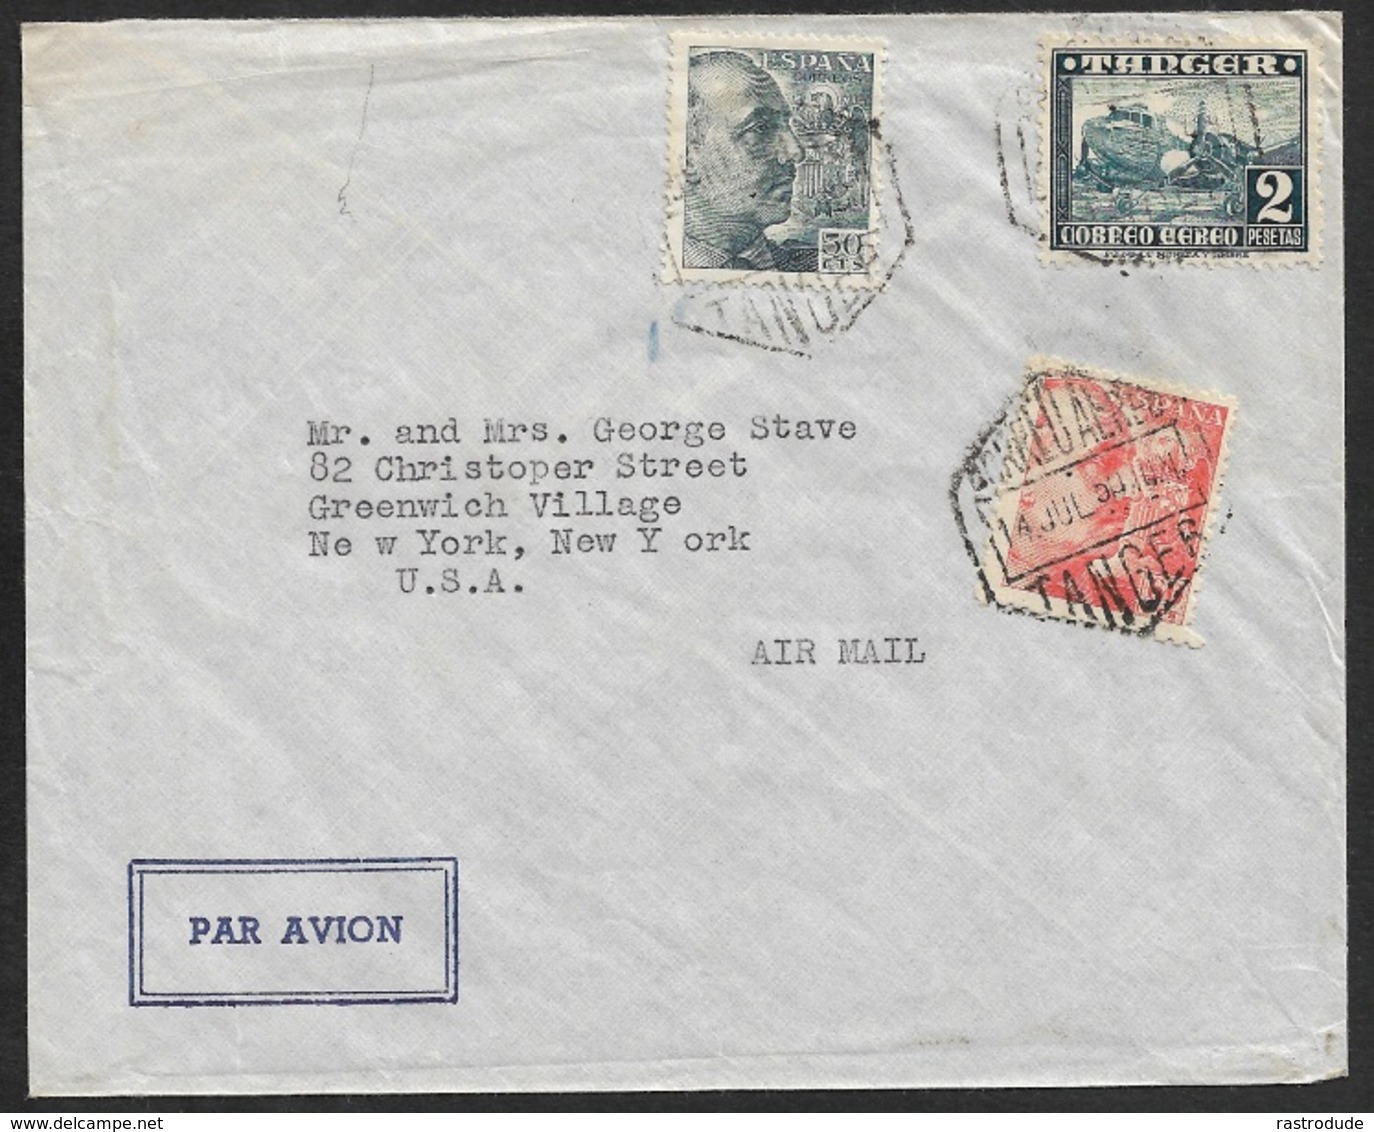 1950 - ESPAÑA / TANGER (Marruecos) - Franqueo Mixto - Correo Aereo A EE.UU - Spain P.O Tangier Mixed Franking To U.S - Cartas & Documentos